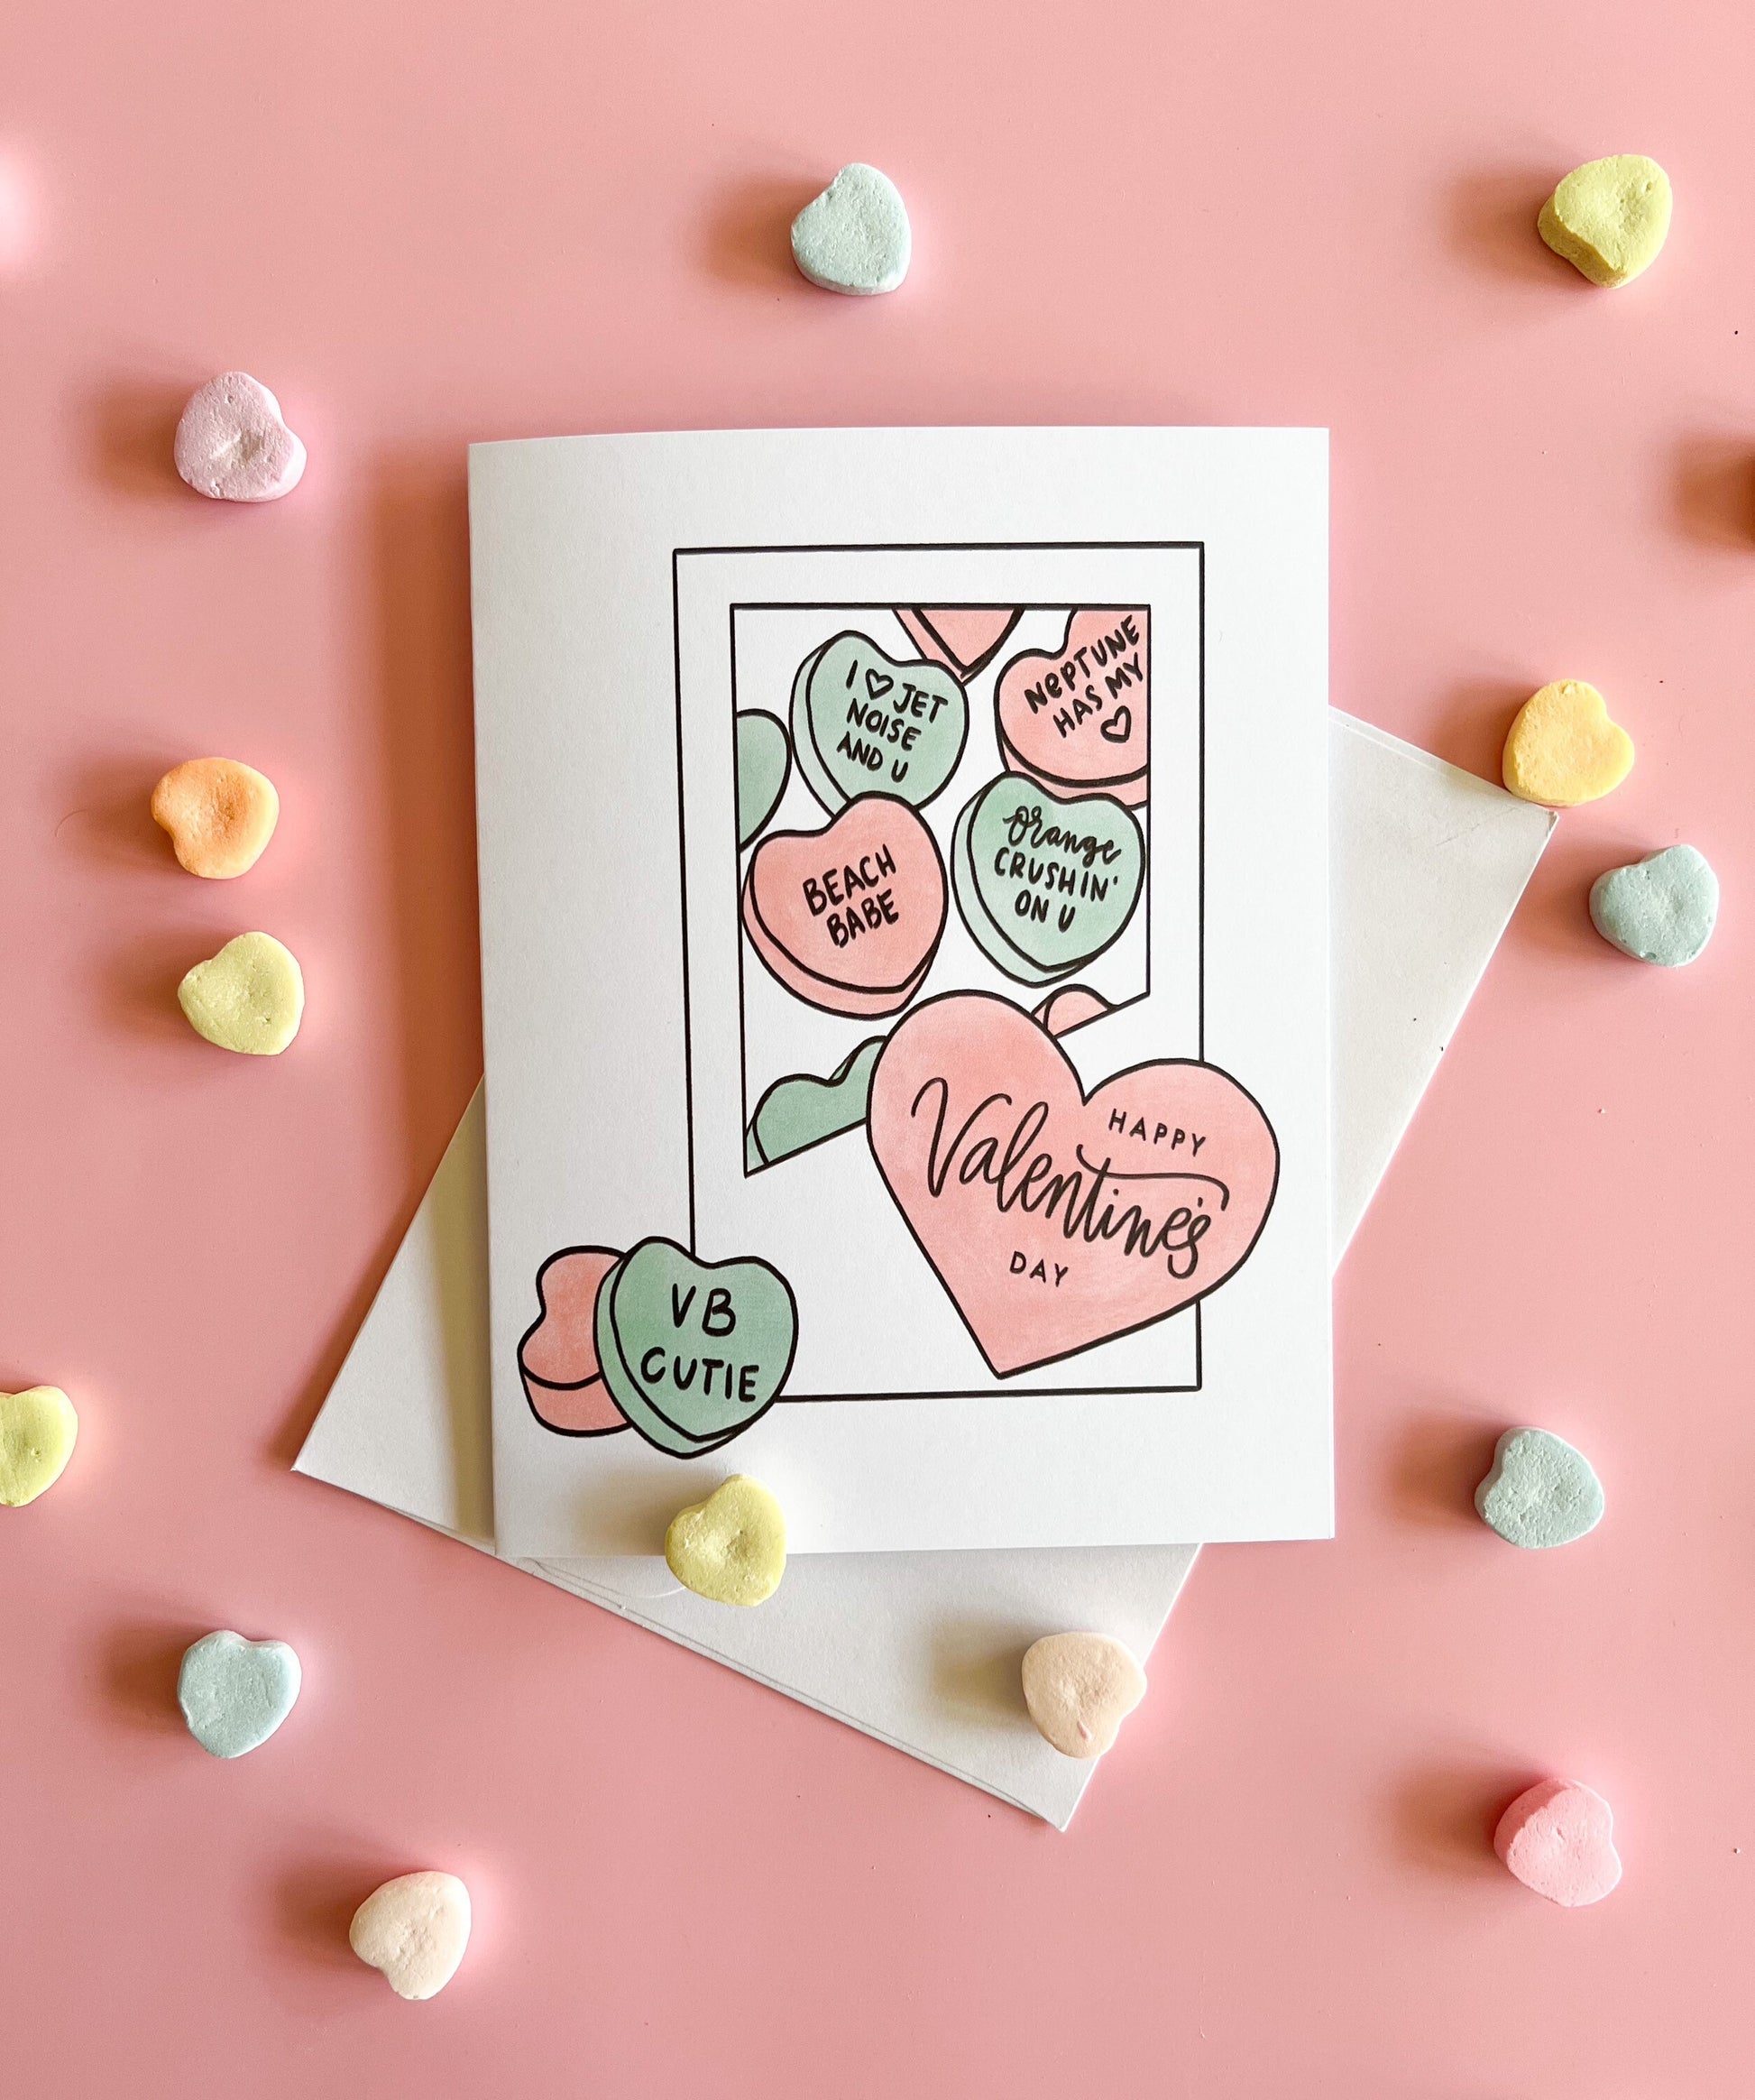 Virginia Beach conversation hearts - Valentine’s Day card - Va Beach